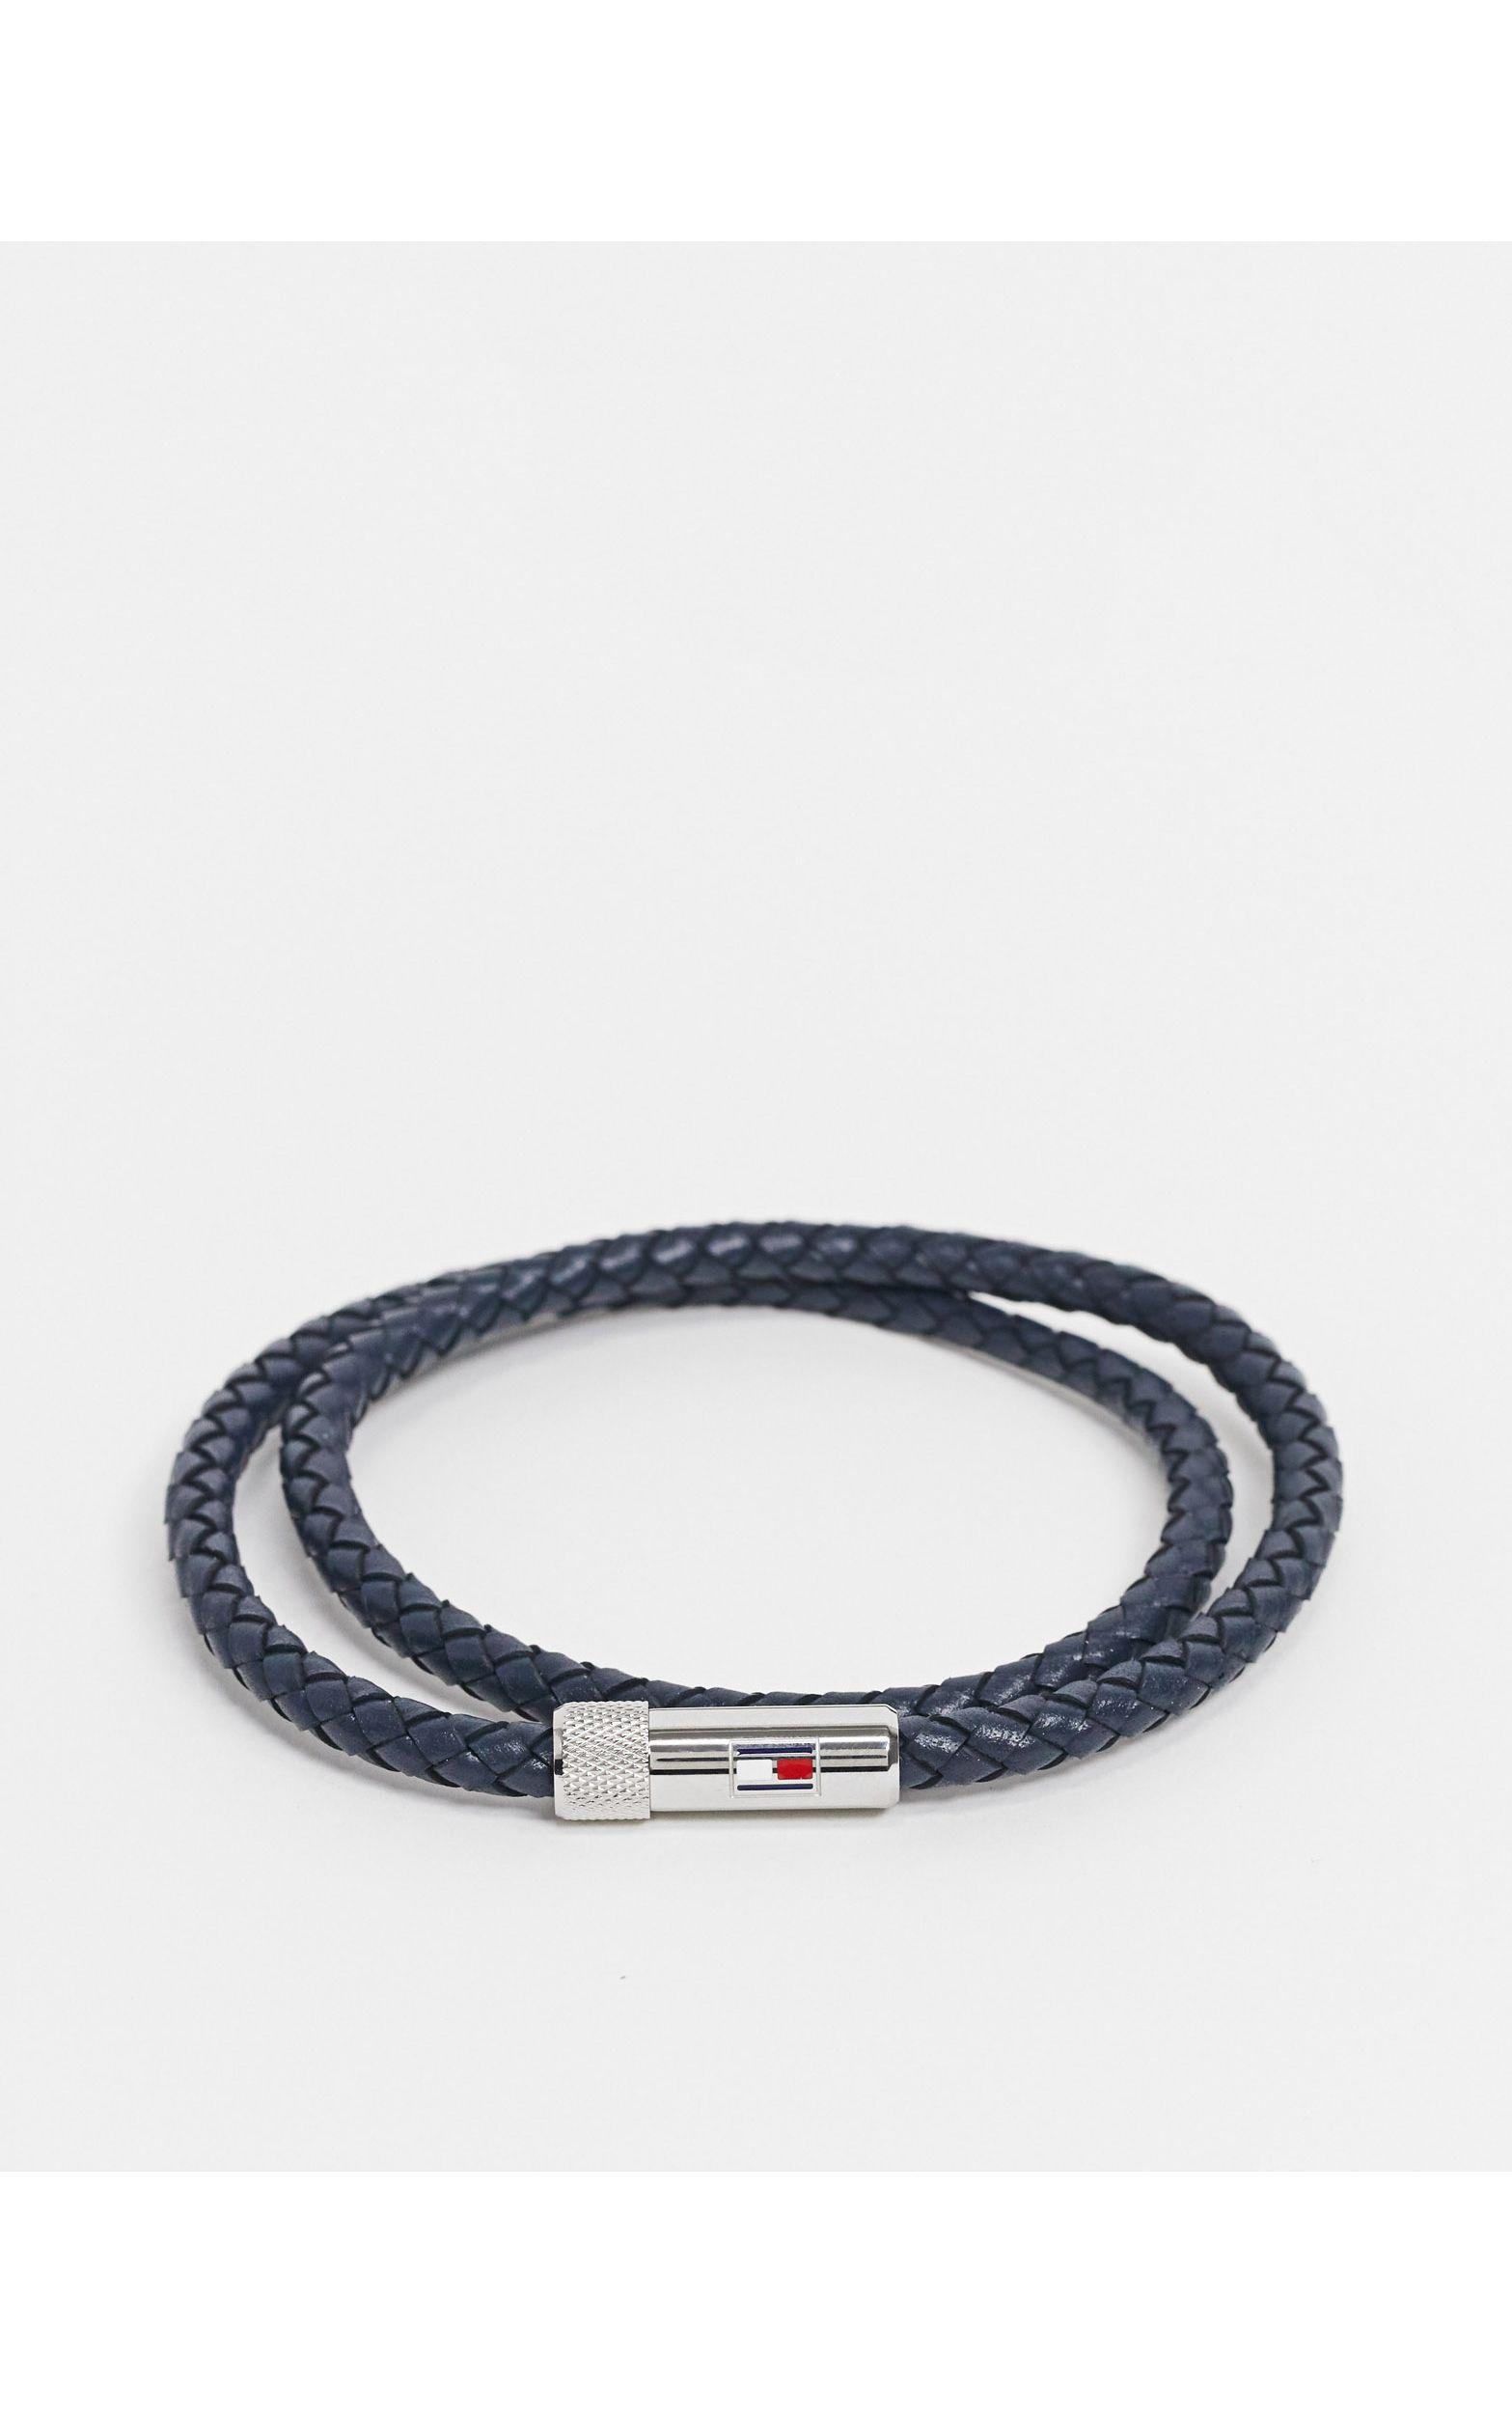 Tommy Hilfiger Double Wrap Leather Bracelet in Navy (Blue) for Men - Lyst